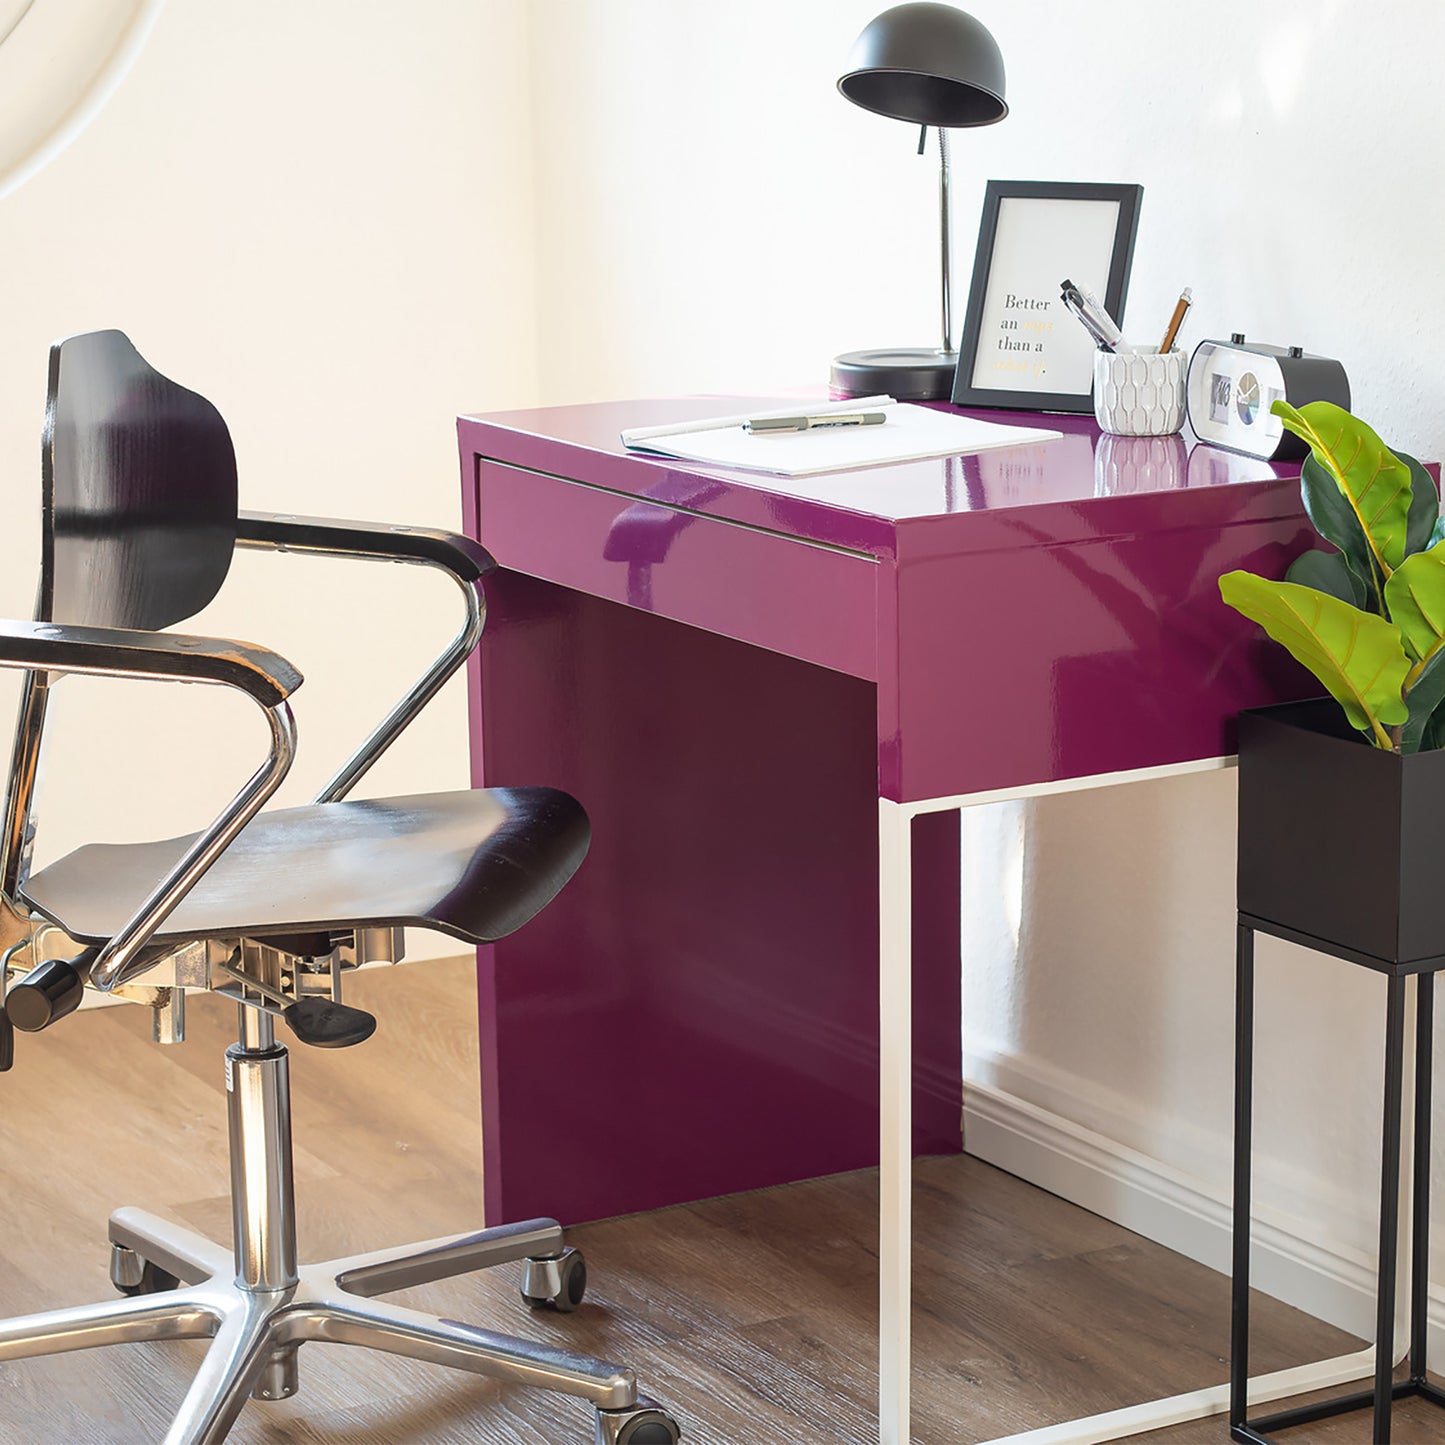 d-c-fix Gloss Berry Purple sticky Back Furniture & Kitchen Wrap